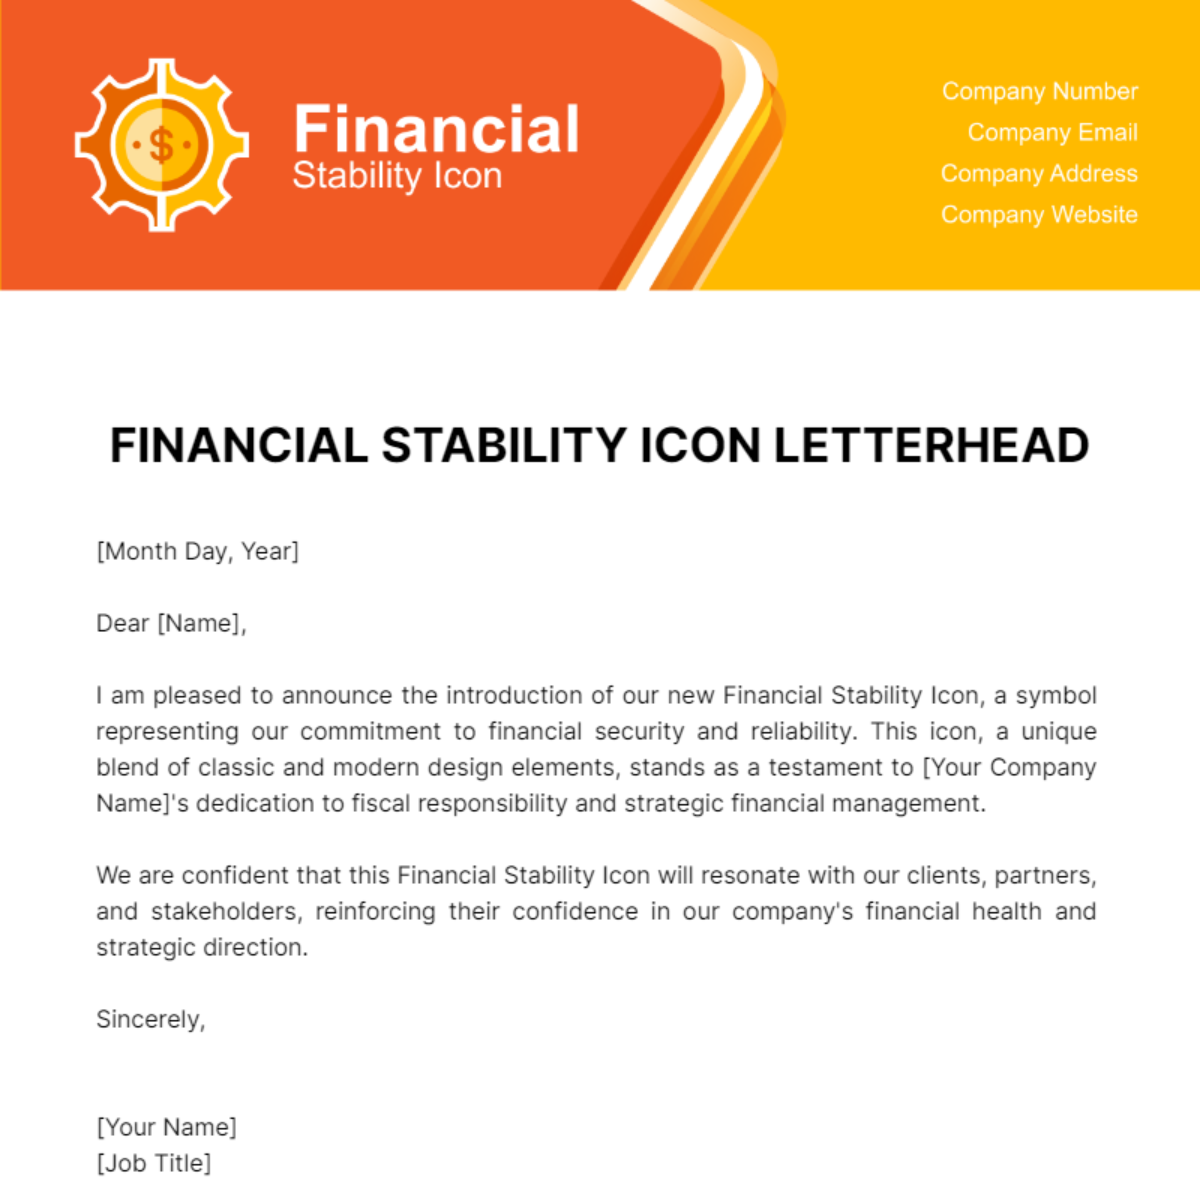 Financial Stability Icon Letterhead Template